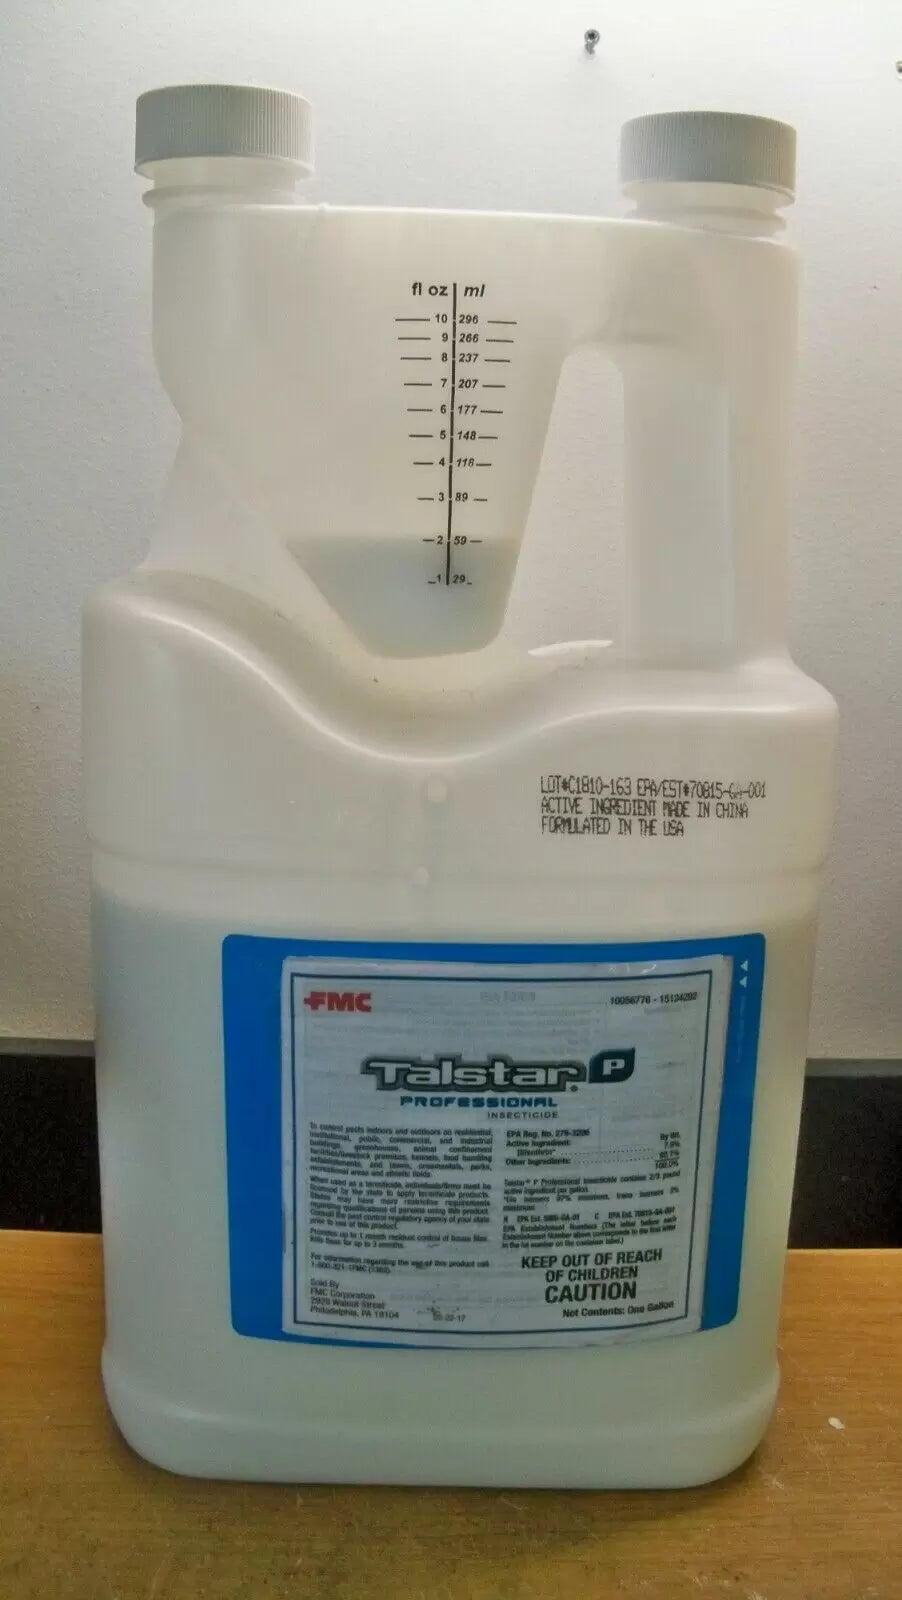 FMC, Talstar P Fmc Professional Insecticide 1 Gallon 128 Oz Bifen 7.9%